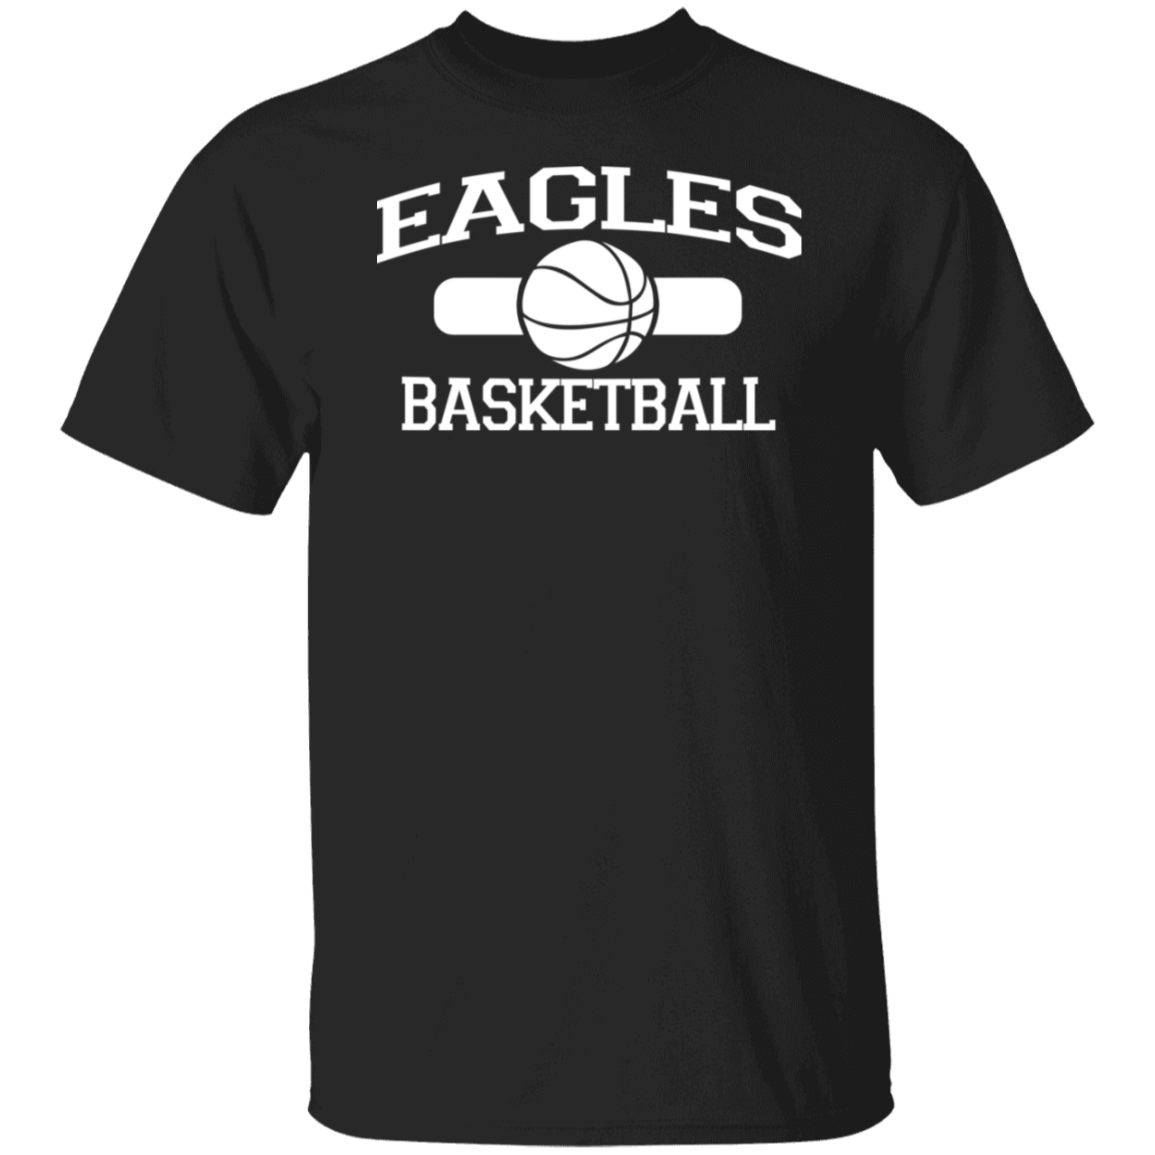 Eagles Basketball White Print T-Shirt